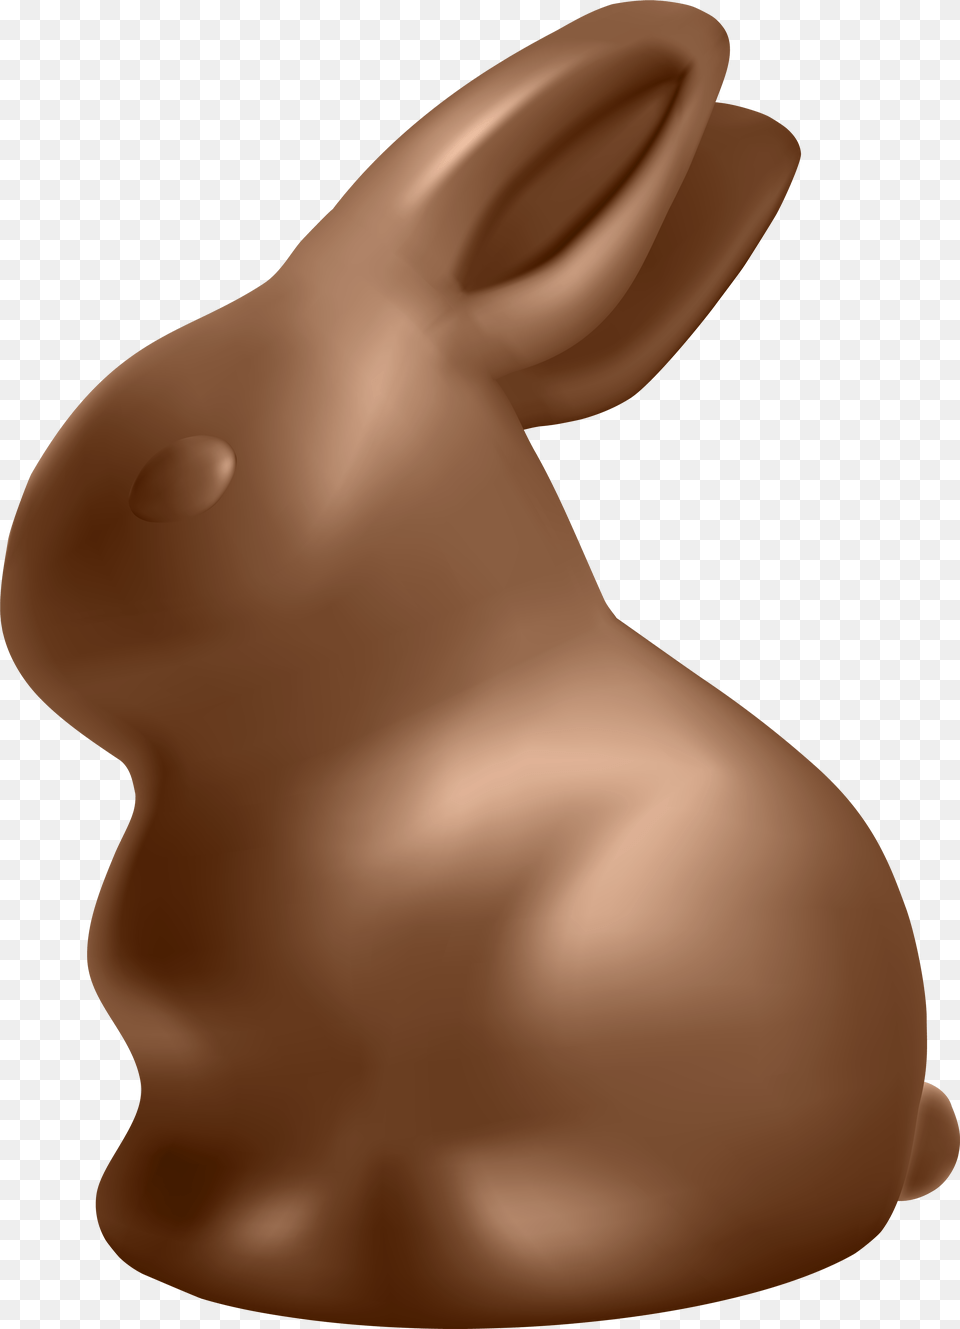 Chocolate Bunny Transparent Background Chocolate Bunny Transparent, Animal, Mammal, Rabbit Png Image